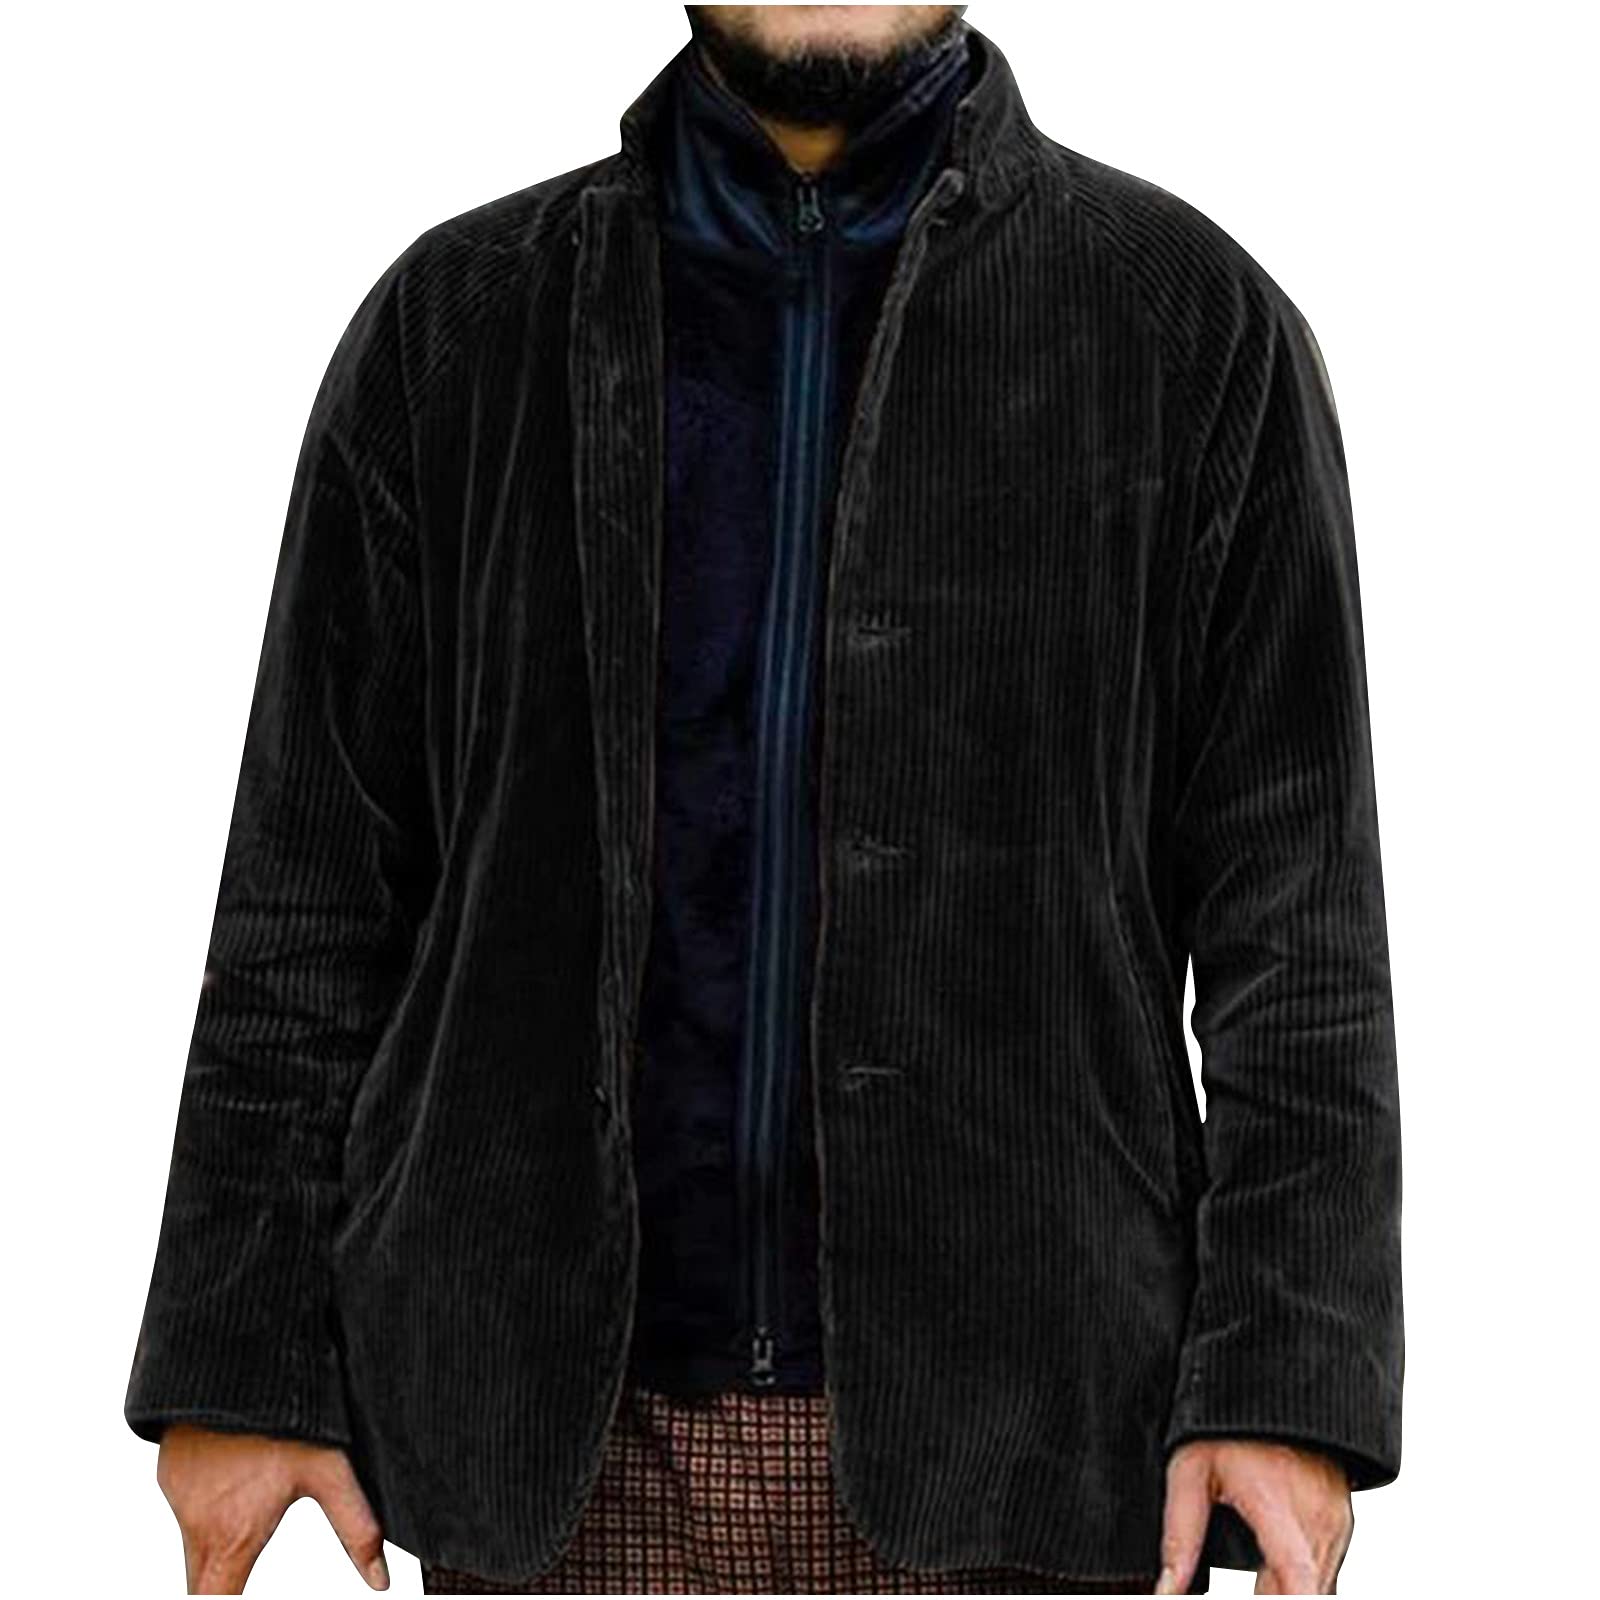 routinfly Cordjacke Herren Vintage Trenchcoat - Herbst Winterjacke Braun Mode Trend Top Jeansjacke